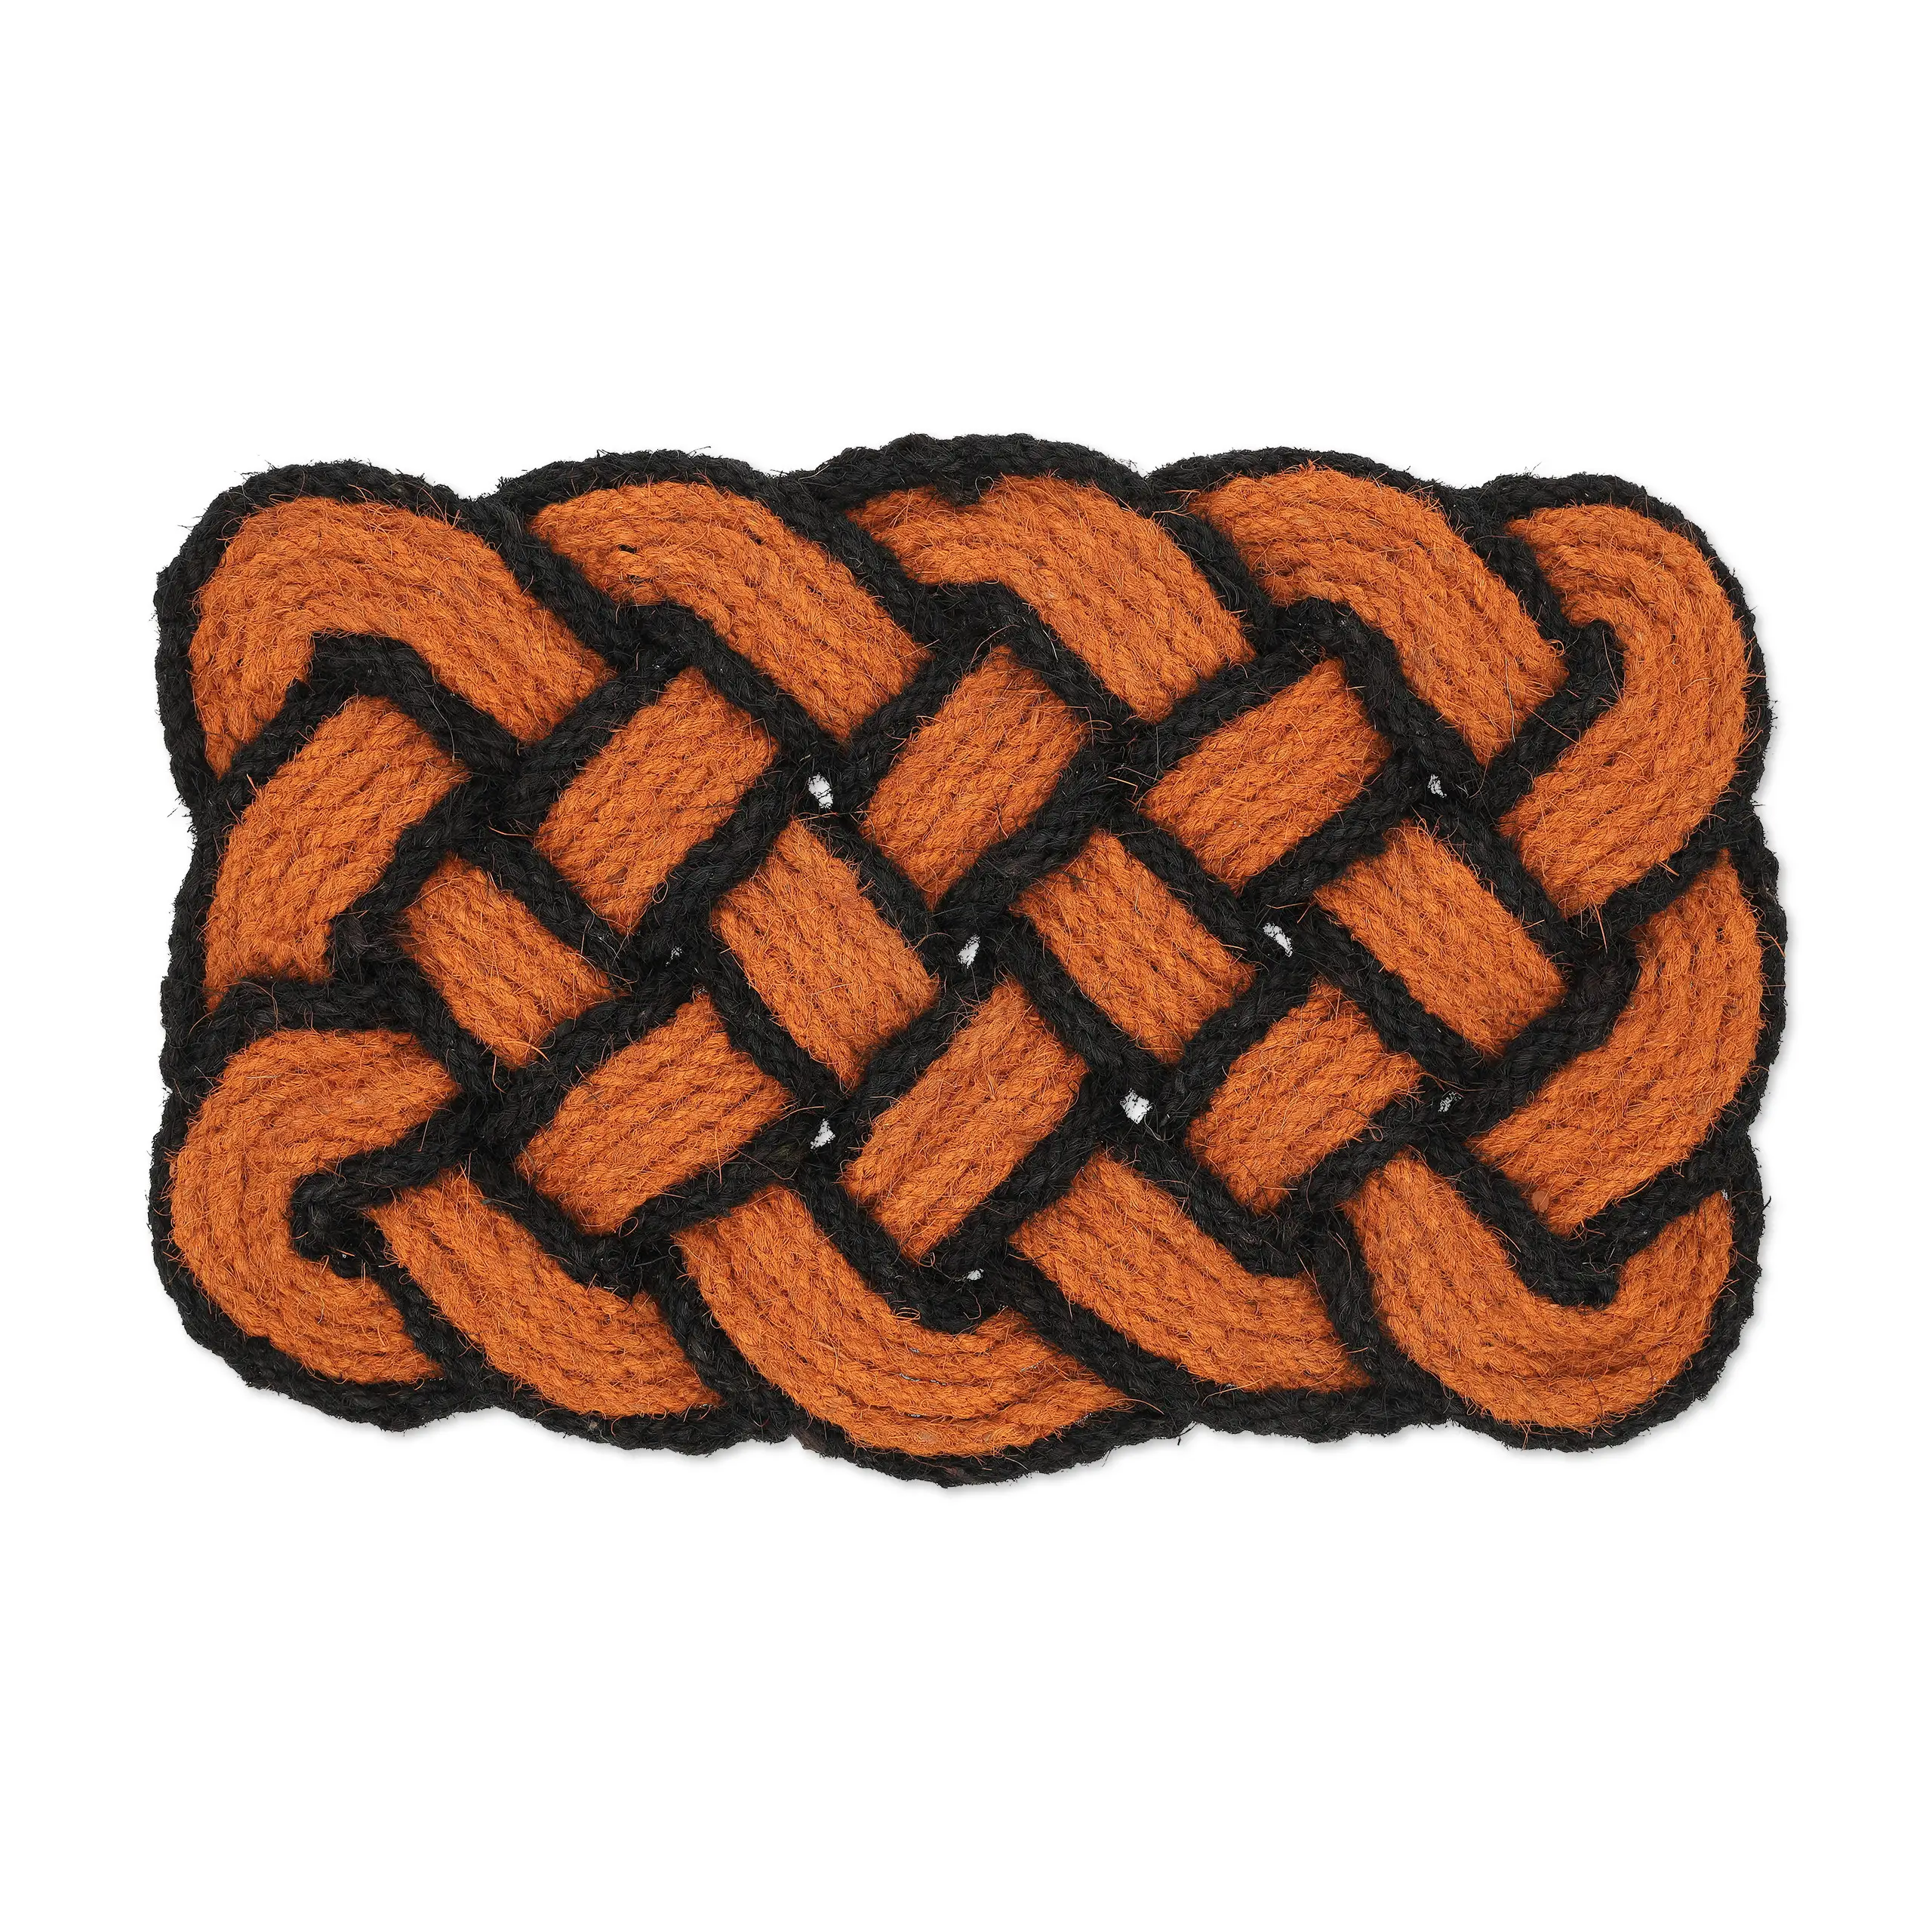 Knoten Fu脽matte orange-schwarz Kokos